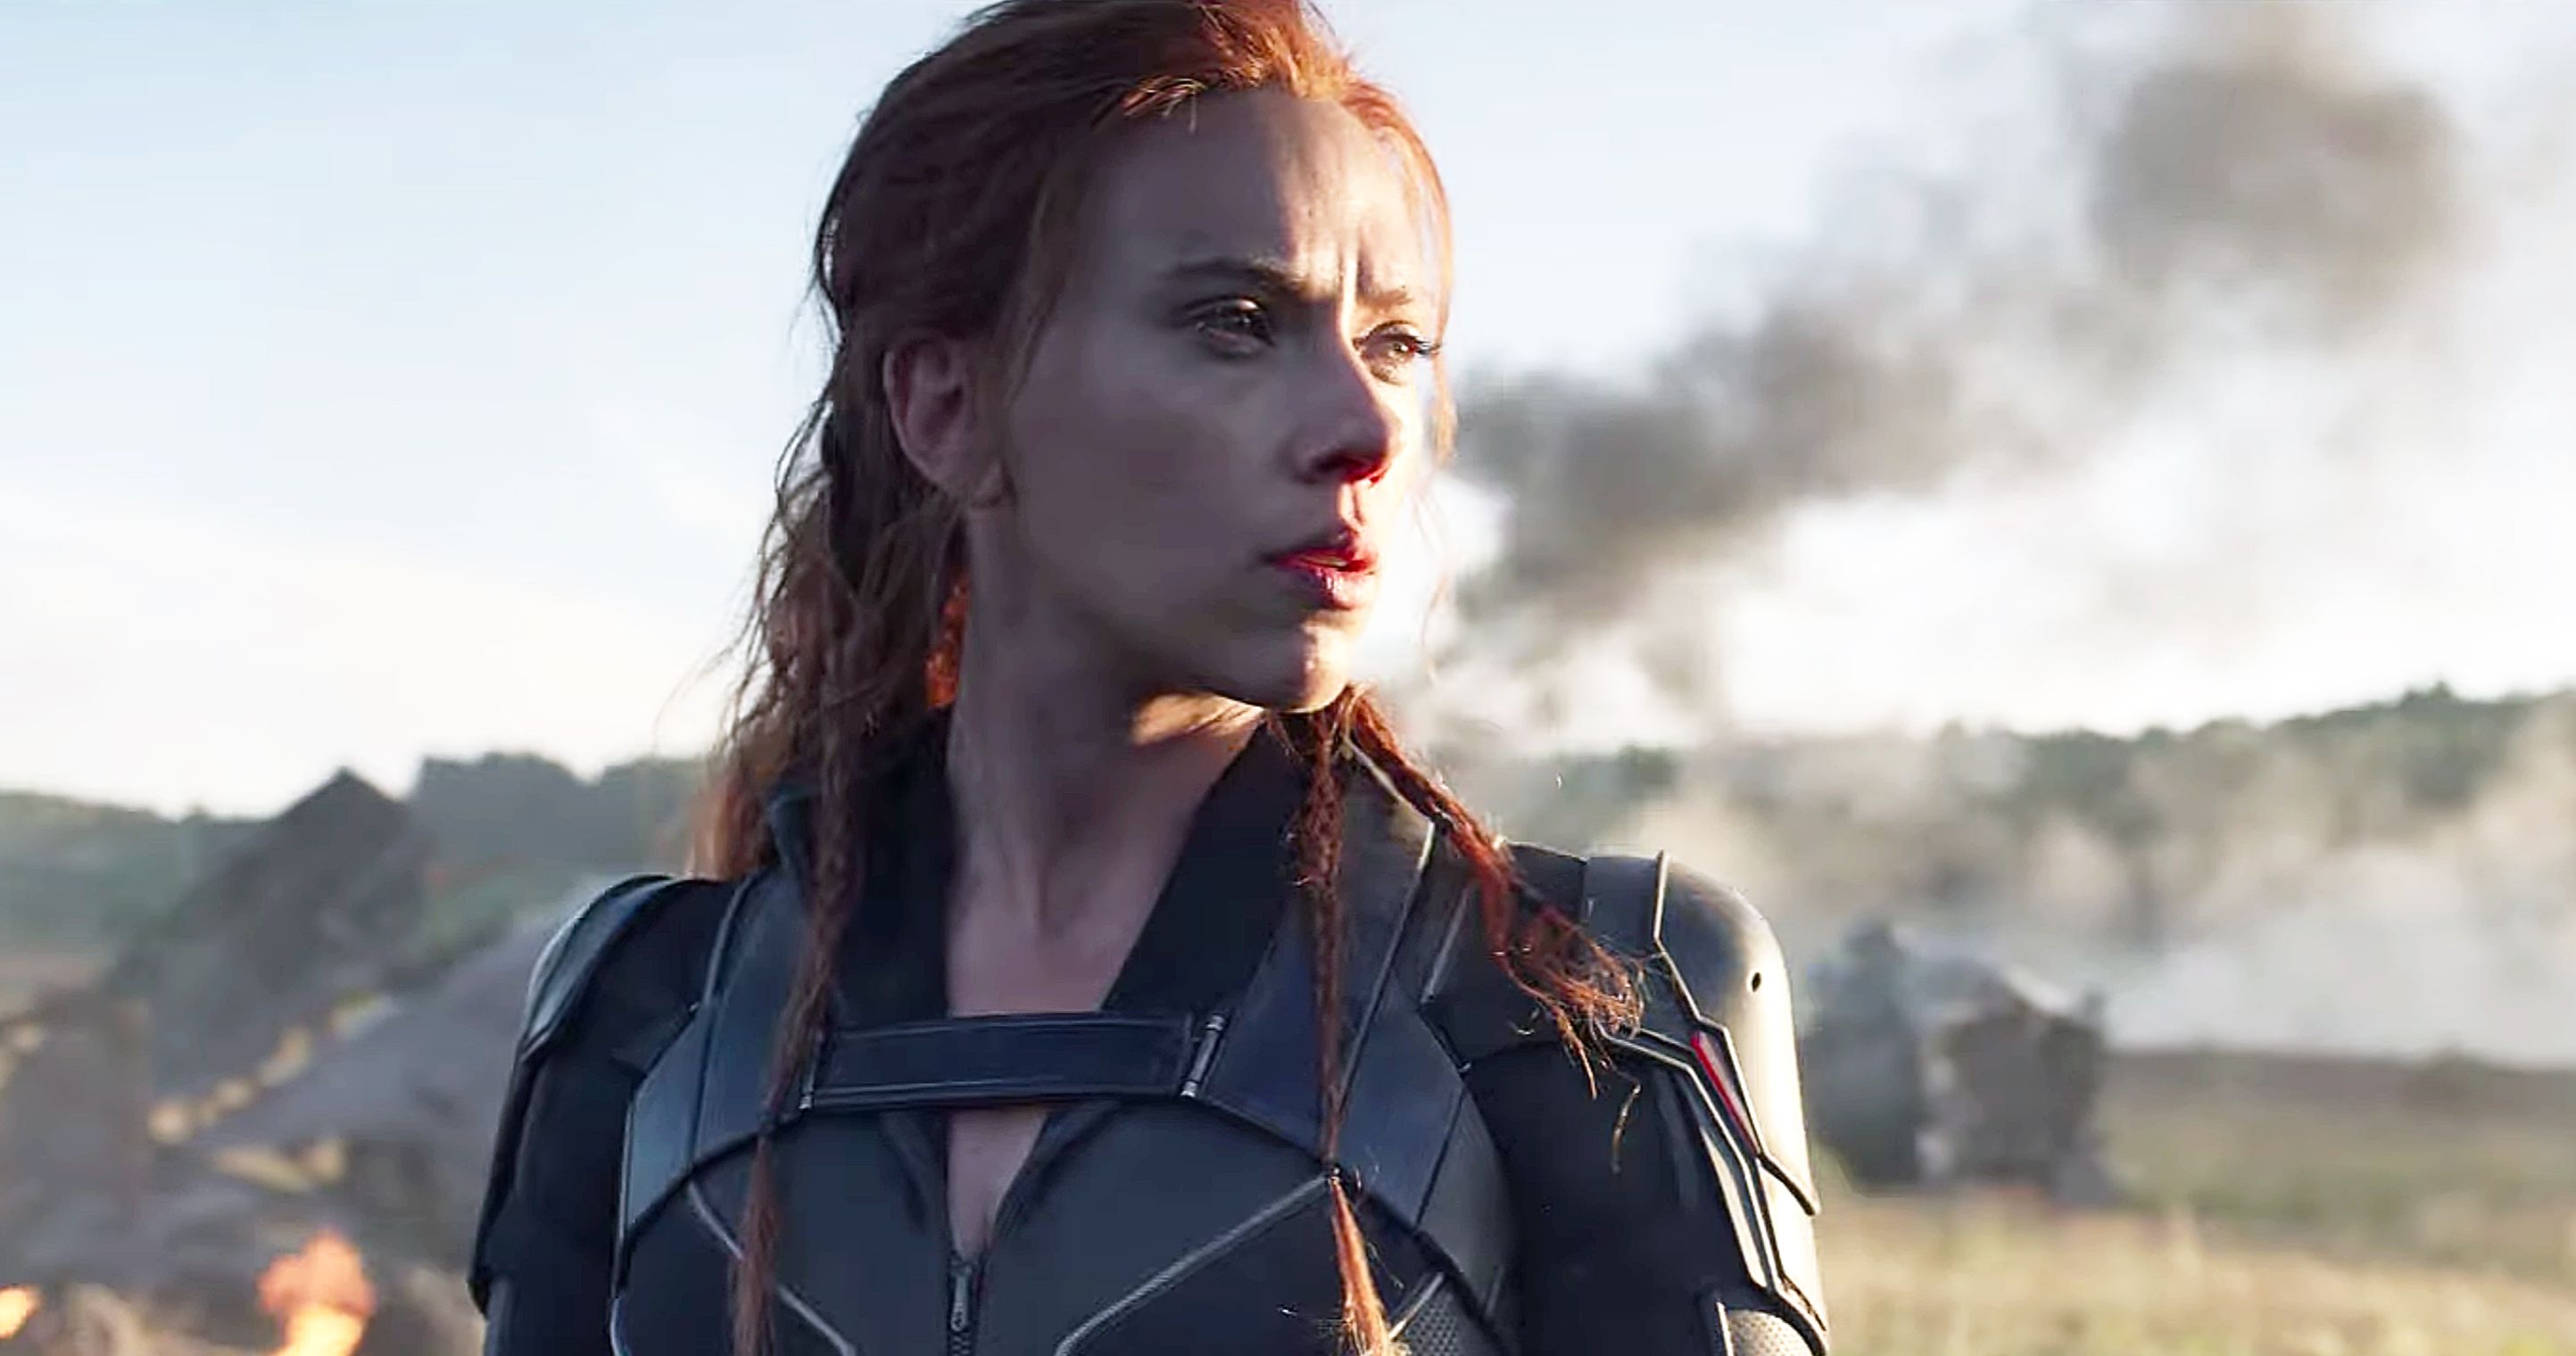 Black Widow Trailer Is Here, Marvel's Phase 4 Begins